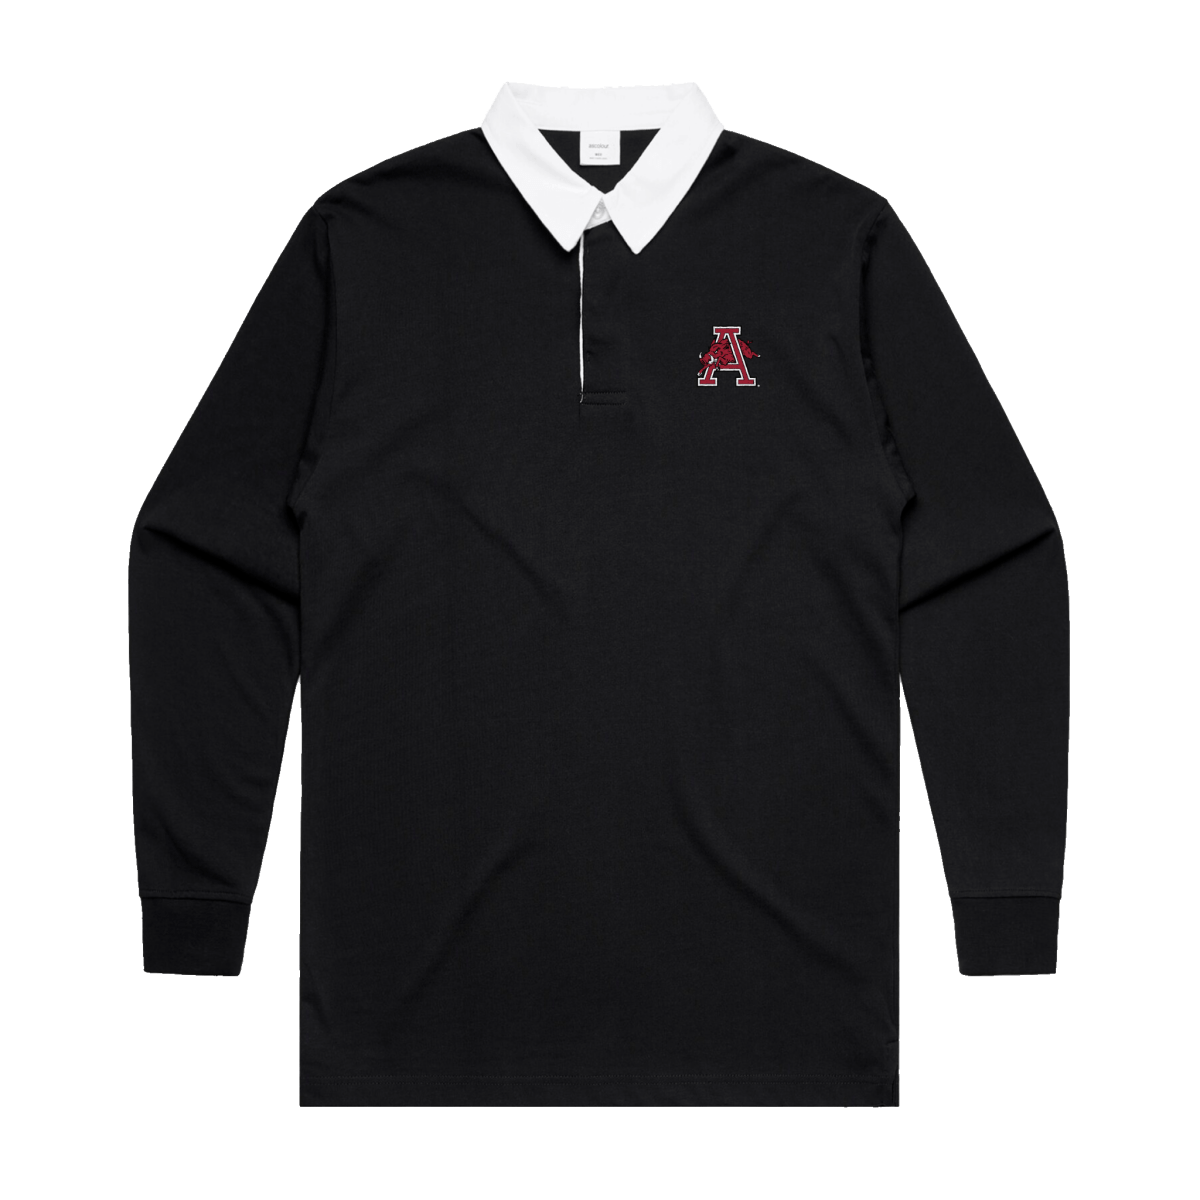 University of Arkansas Logo Rugby Jersey - Shop B-Unlimited